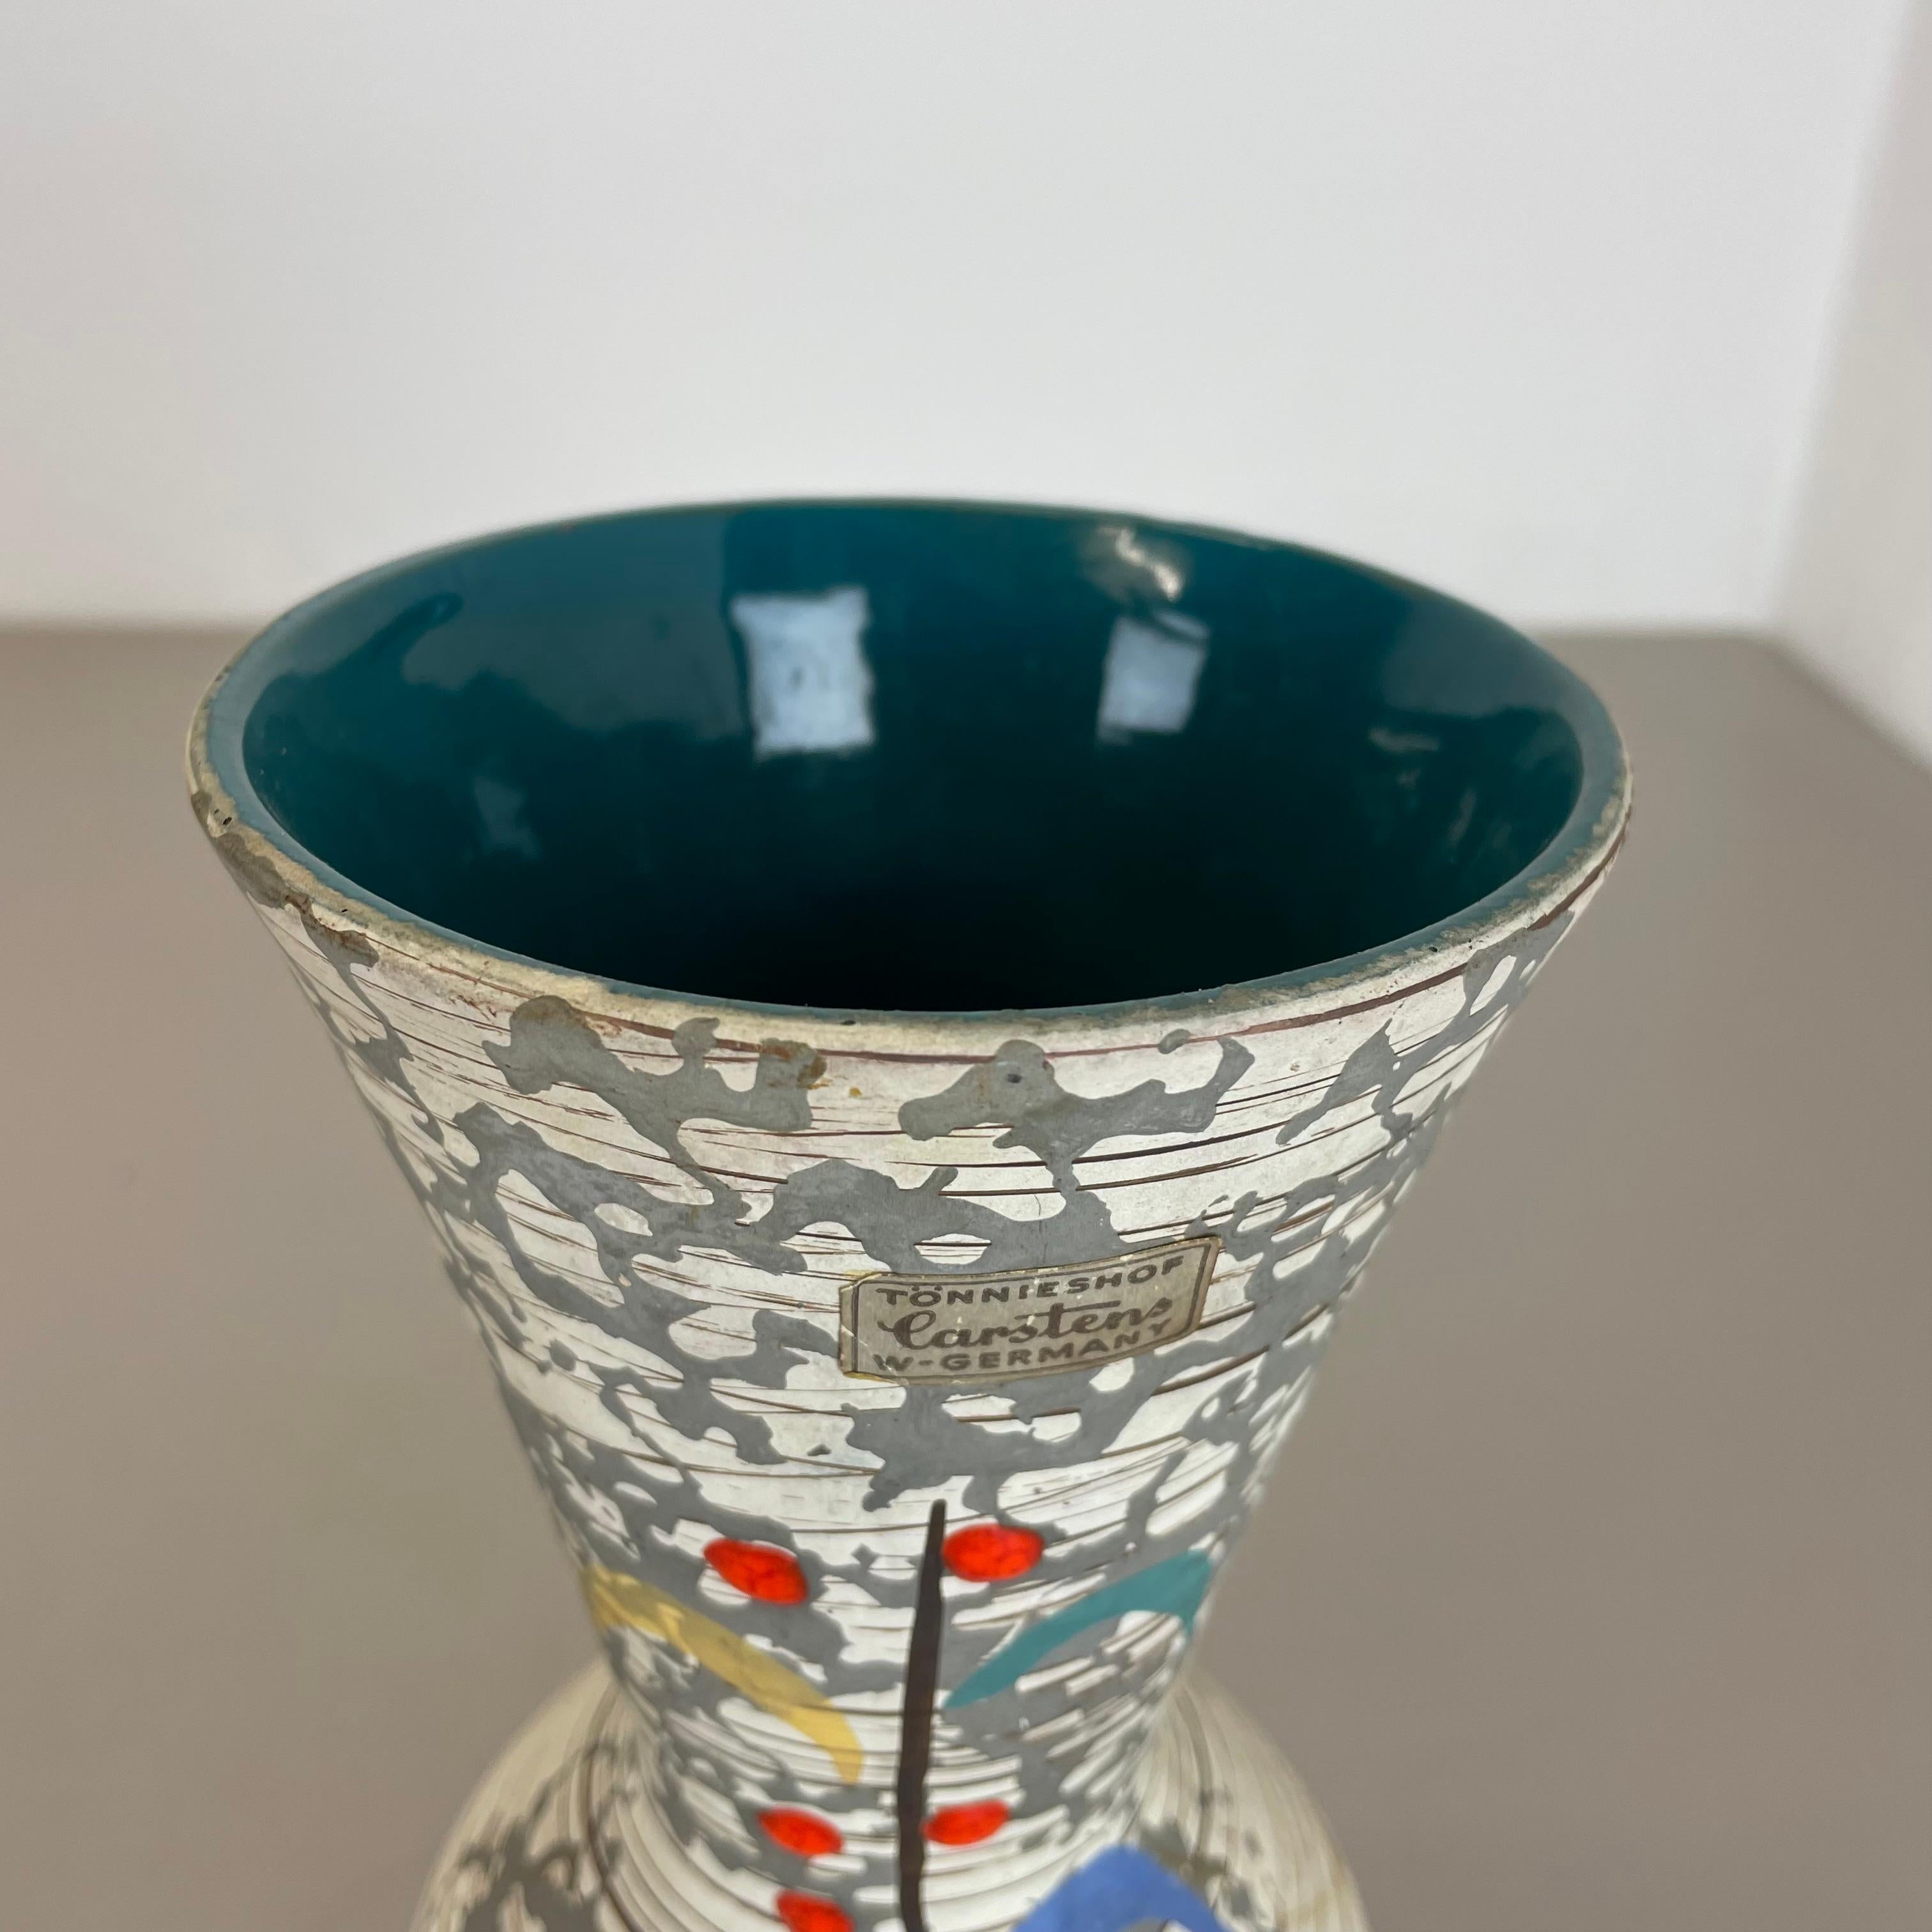 Super Glaze ABSTRACT Ceramic Pottery Vase Carstens Tönnieshof Germany, 1950s For Sale 2